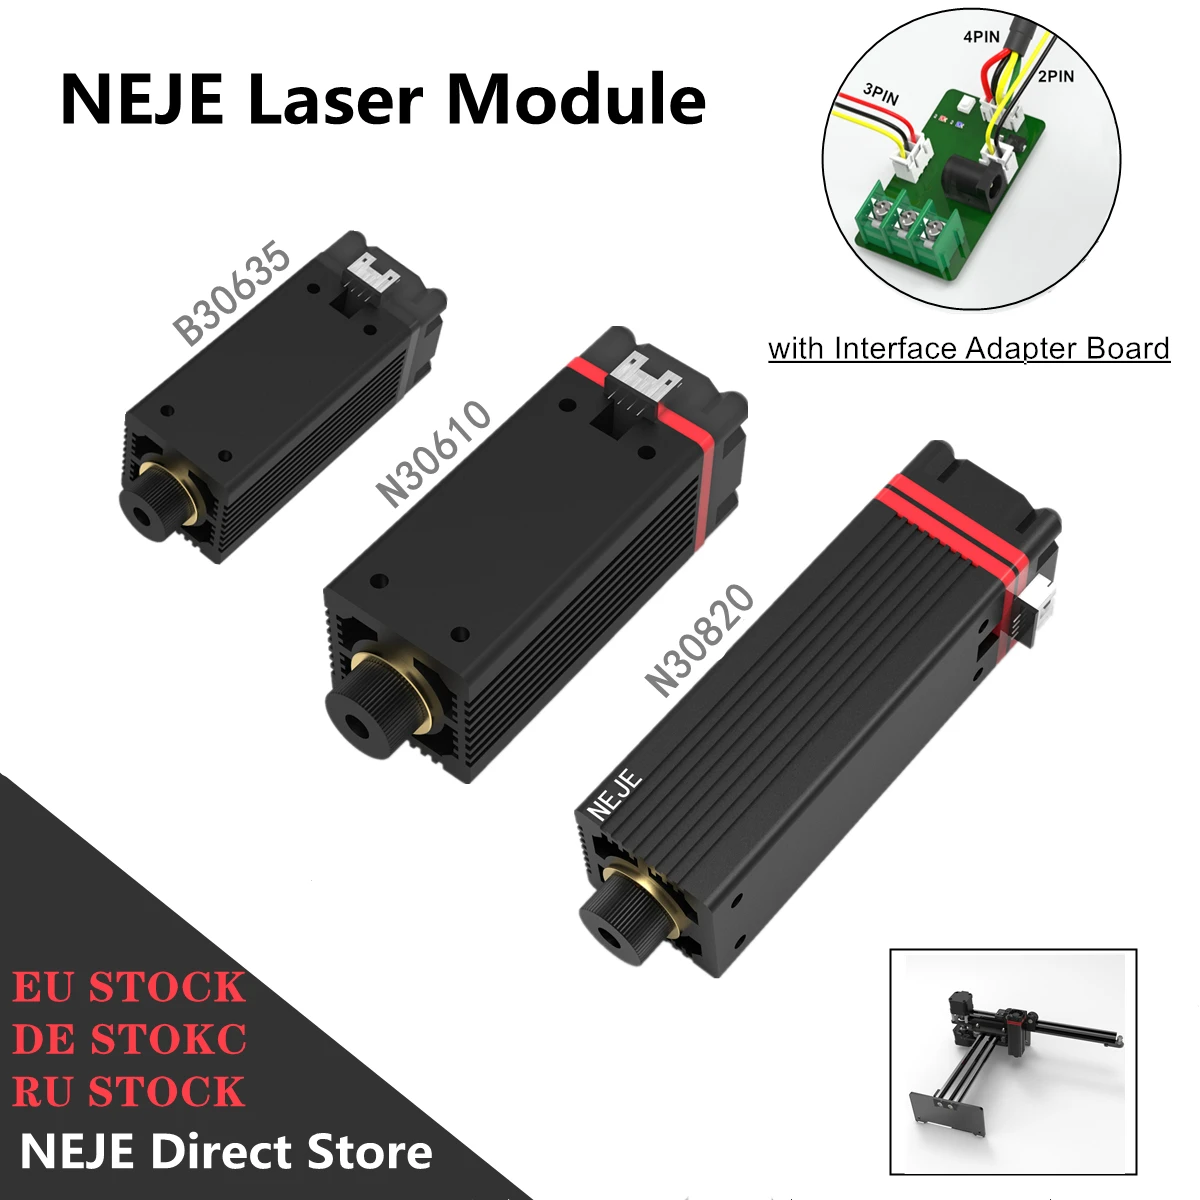 NEJE 20W/10W N30820/N30610 Laser Module Kit for 445-450nm CNC Laser Engraving Wood Machine With TTL Modulation for DIY Creation